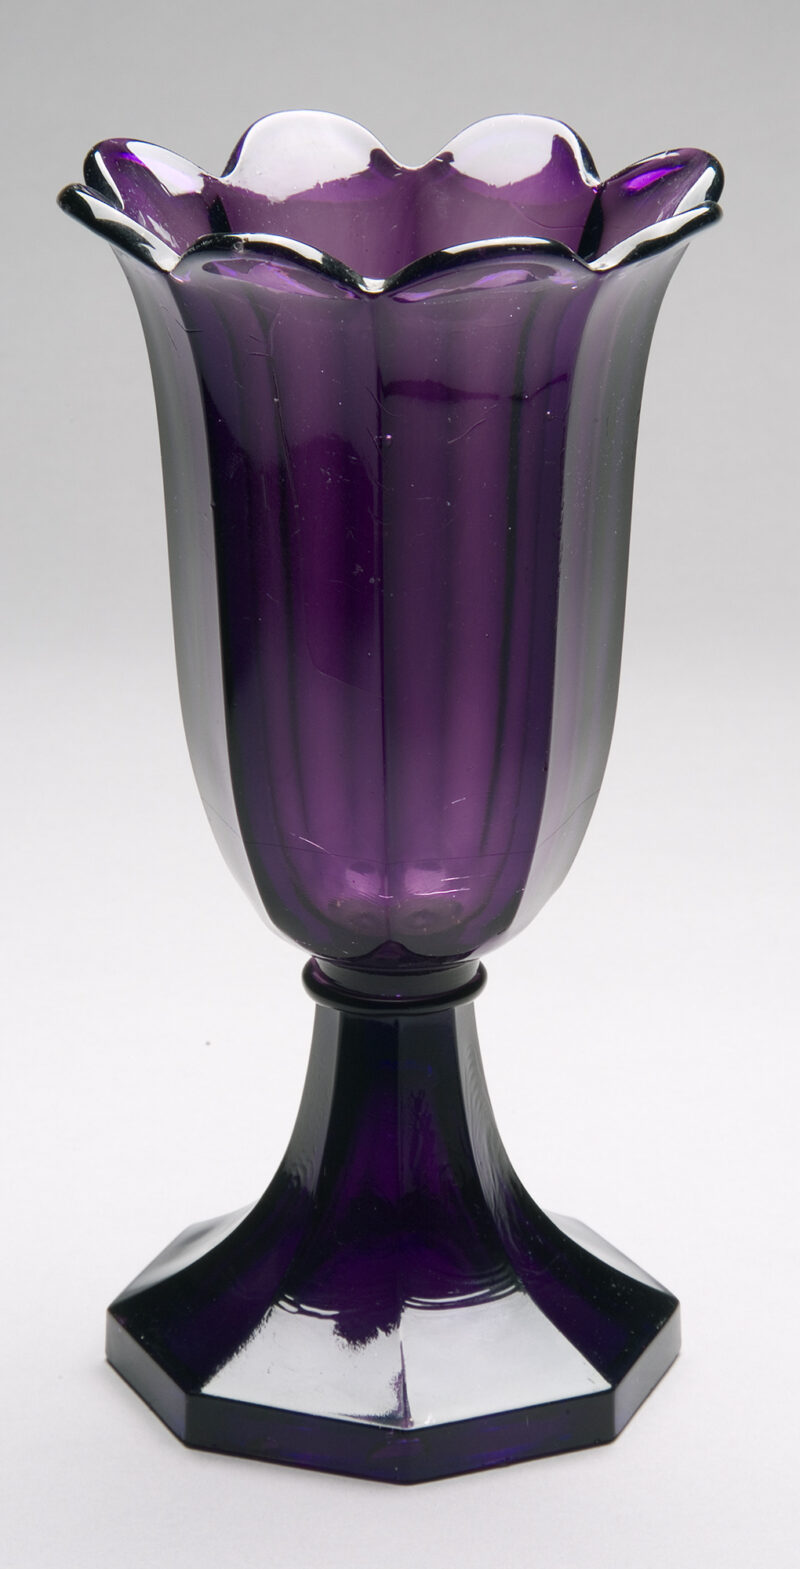 Trumpet-shaped vase with 8 vertical panels around sides. Rim scalloped & flared. Flat disk below bowl joins bowl to base. Flaring, hollow octagonal pedestal base. Transparent amethyst color.